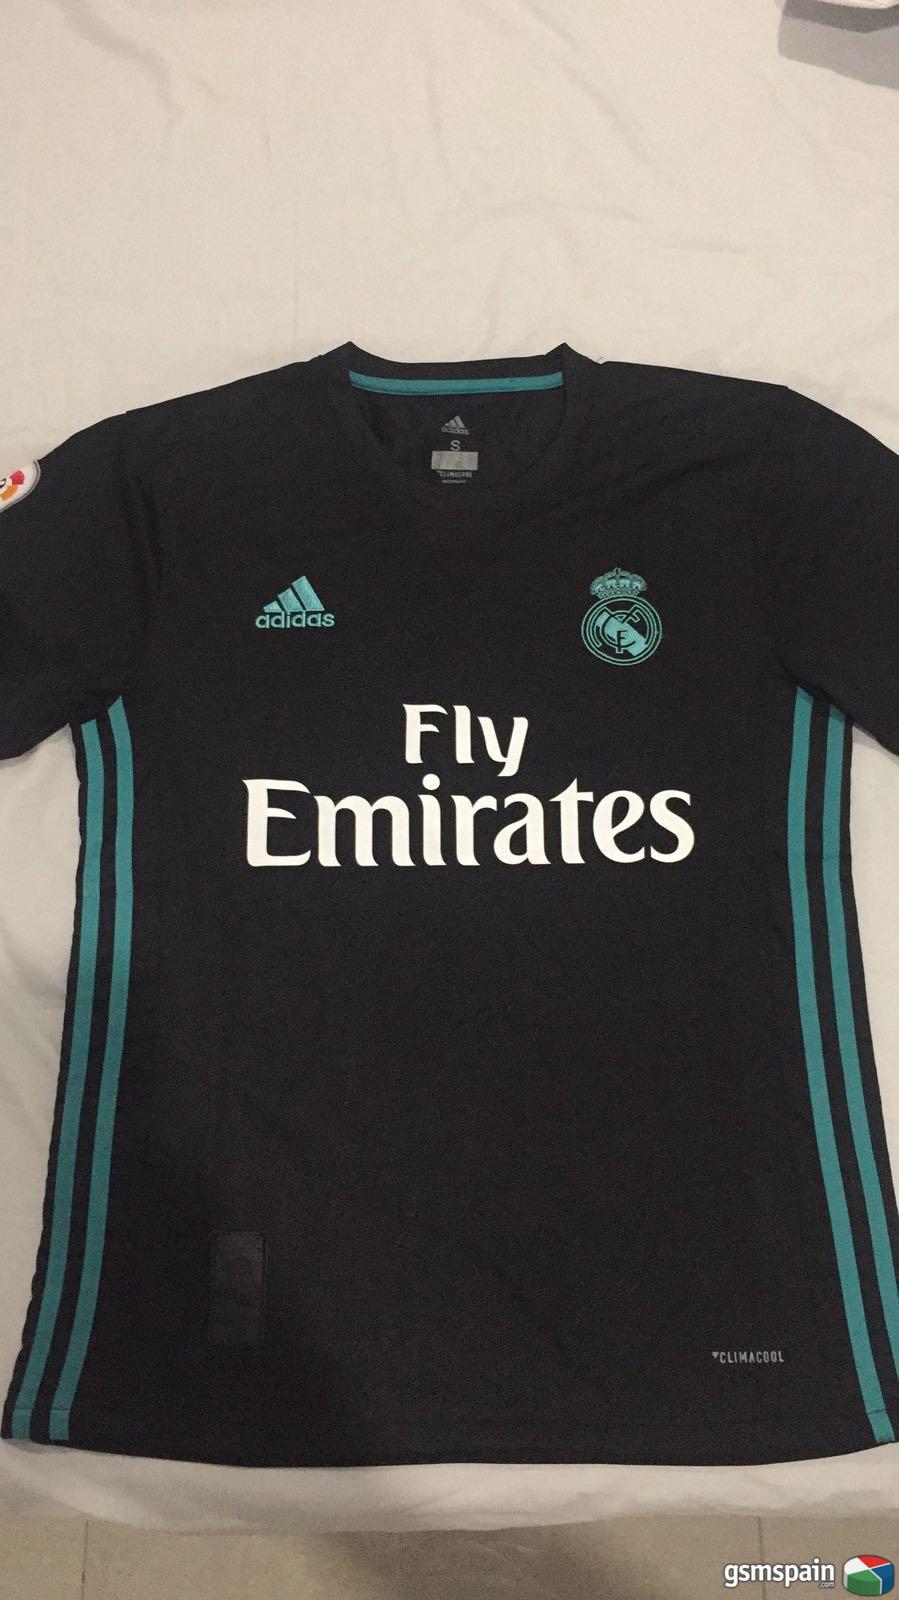 [VENDO] Camiseta REAL MADRID temporada 17-18, talla S